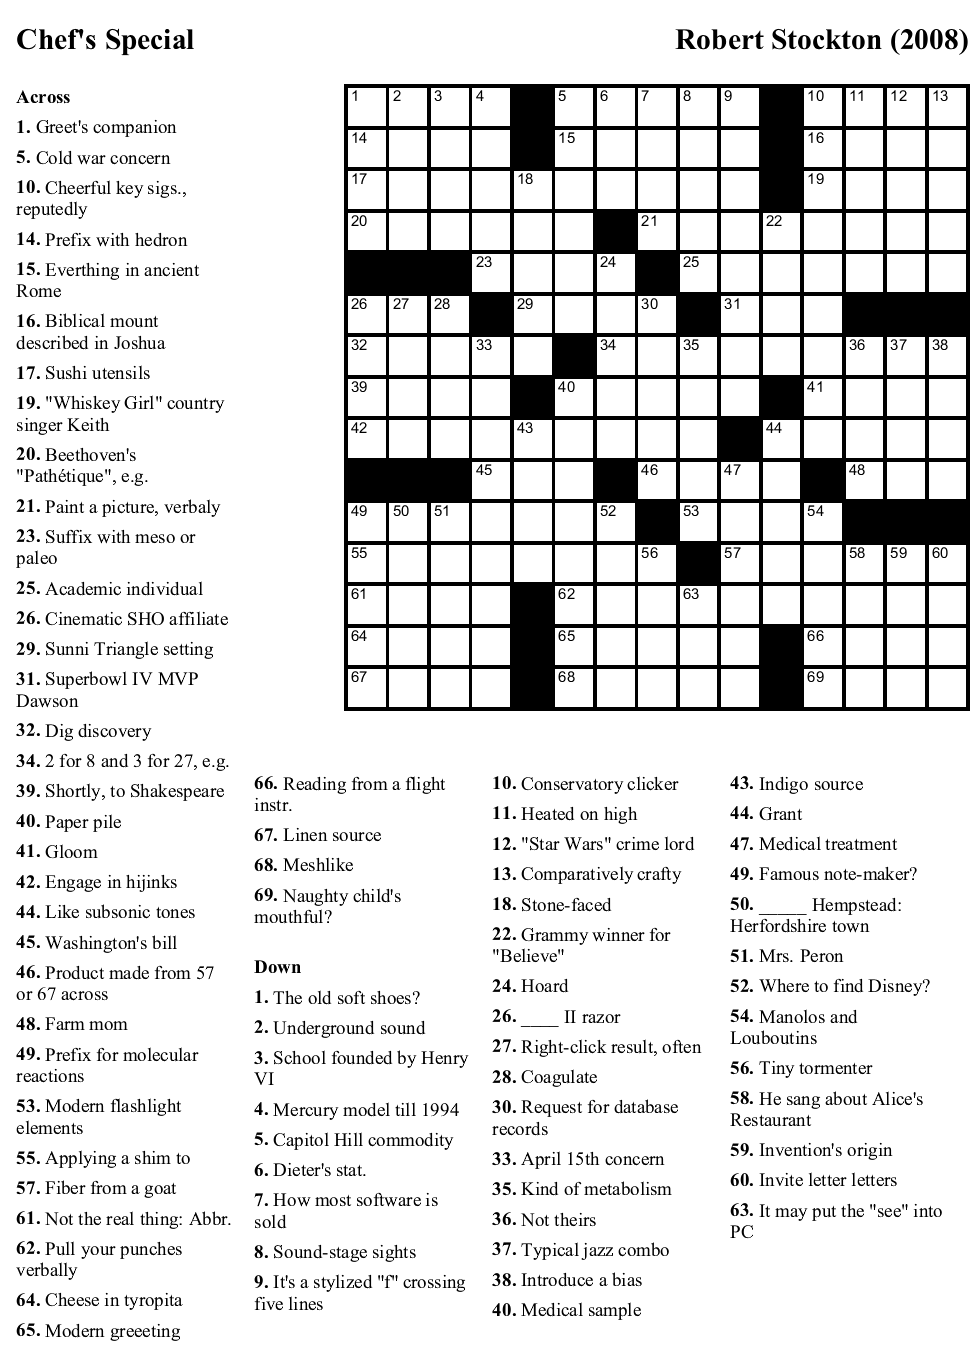 Printable Monday New York Times Crossword Puzzles